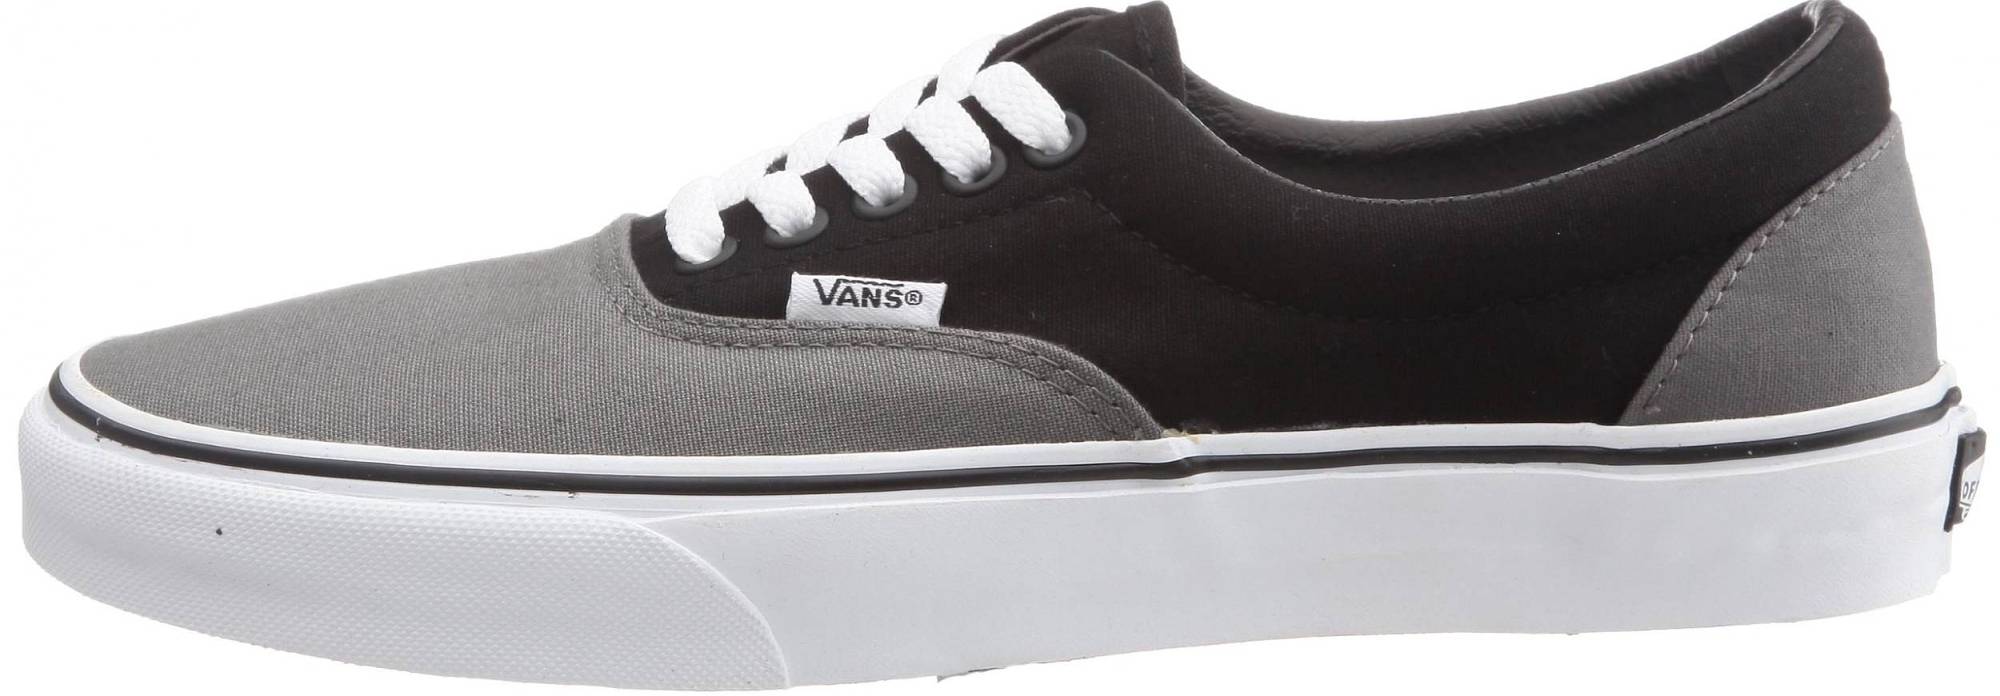 Vans Era – Shoes Reviews & Reasons To Buy